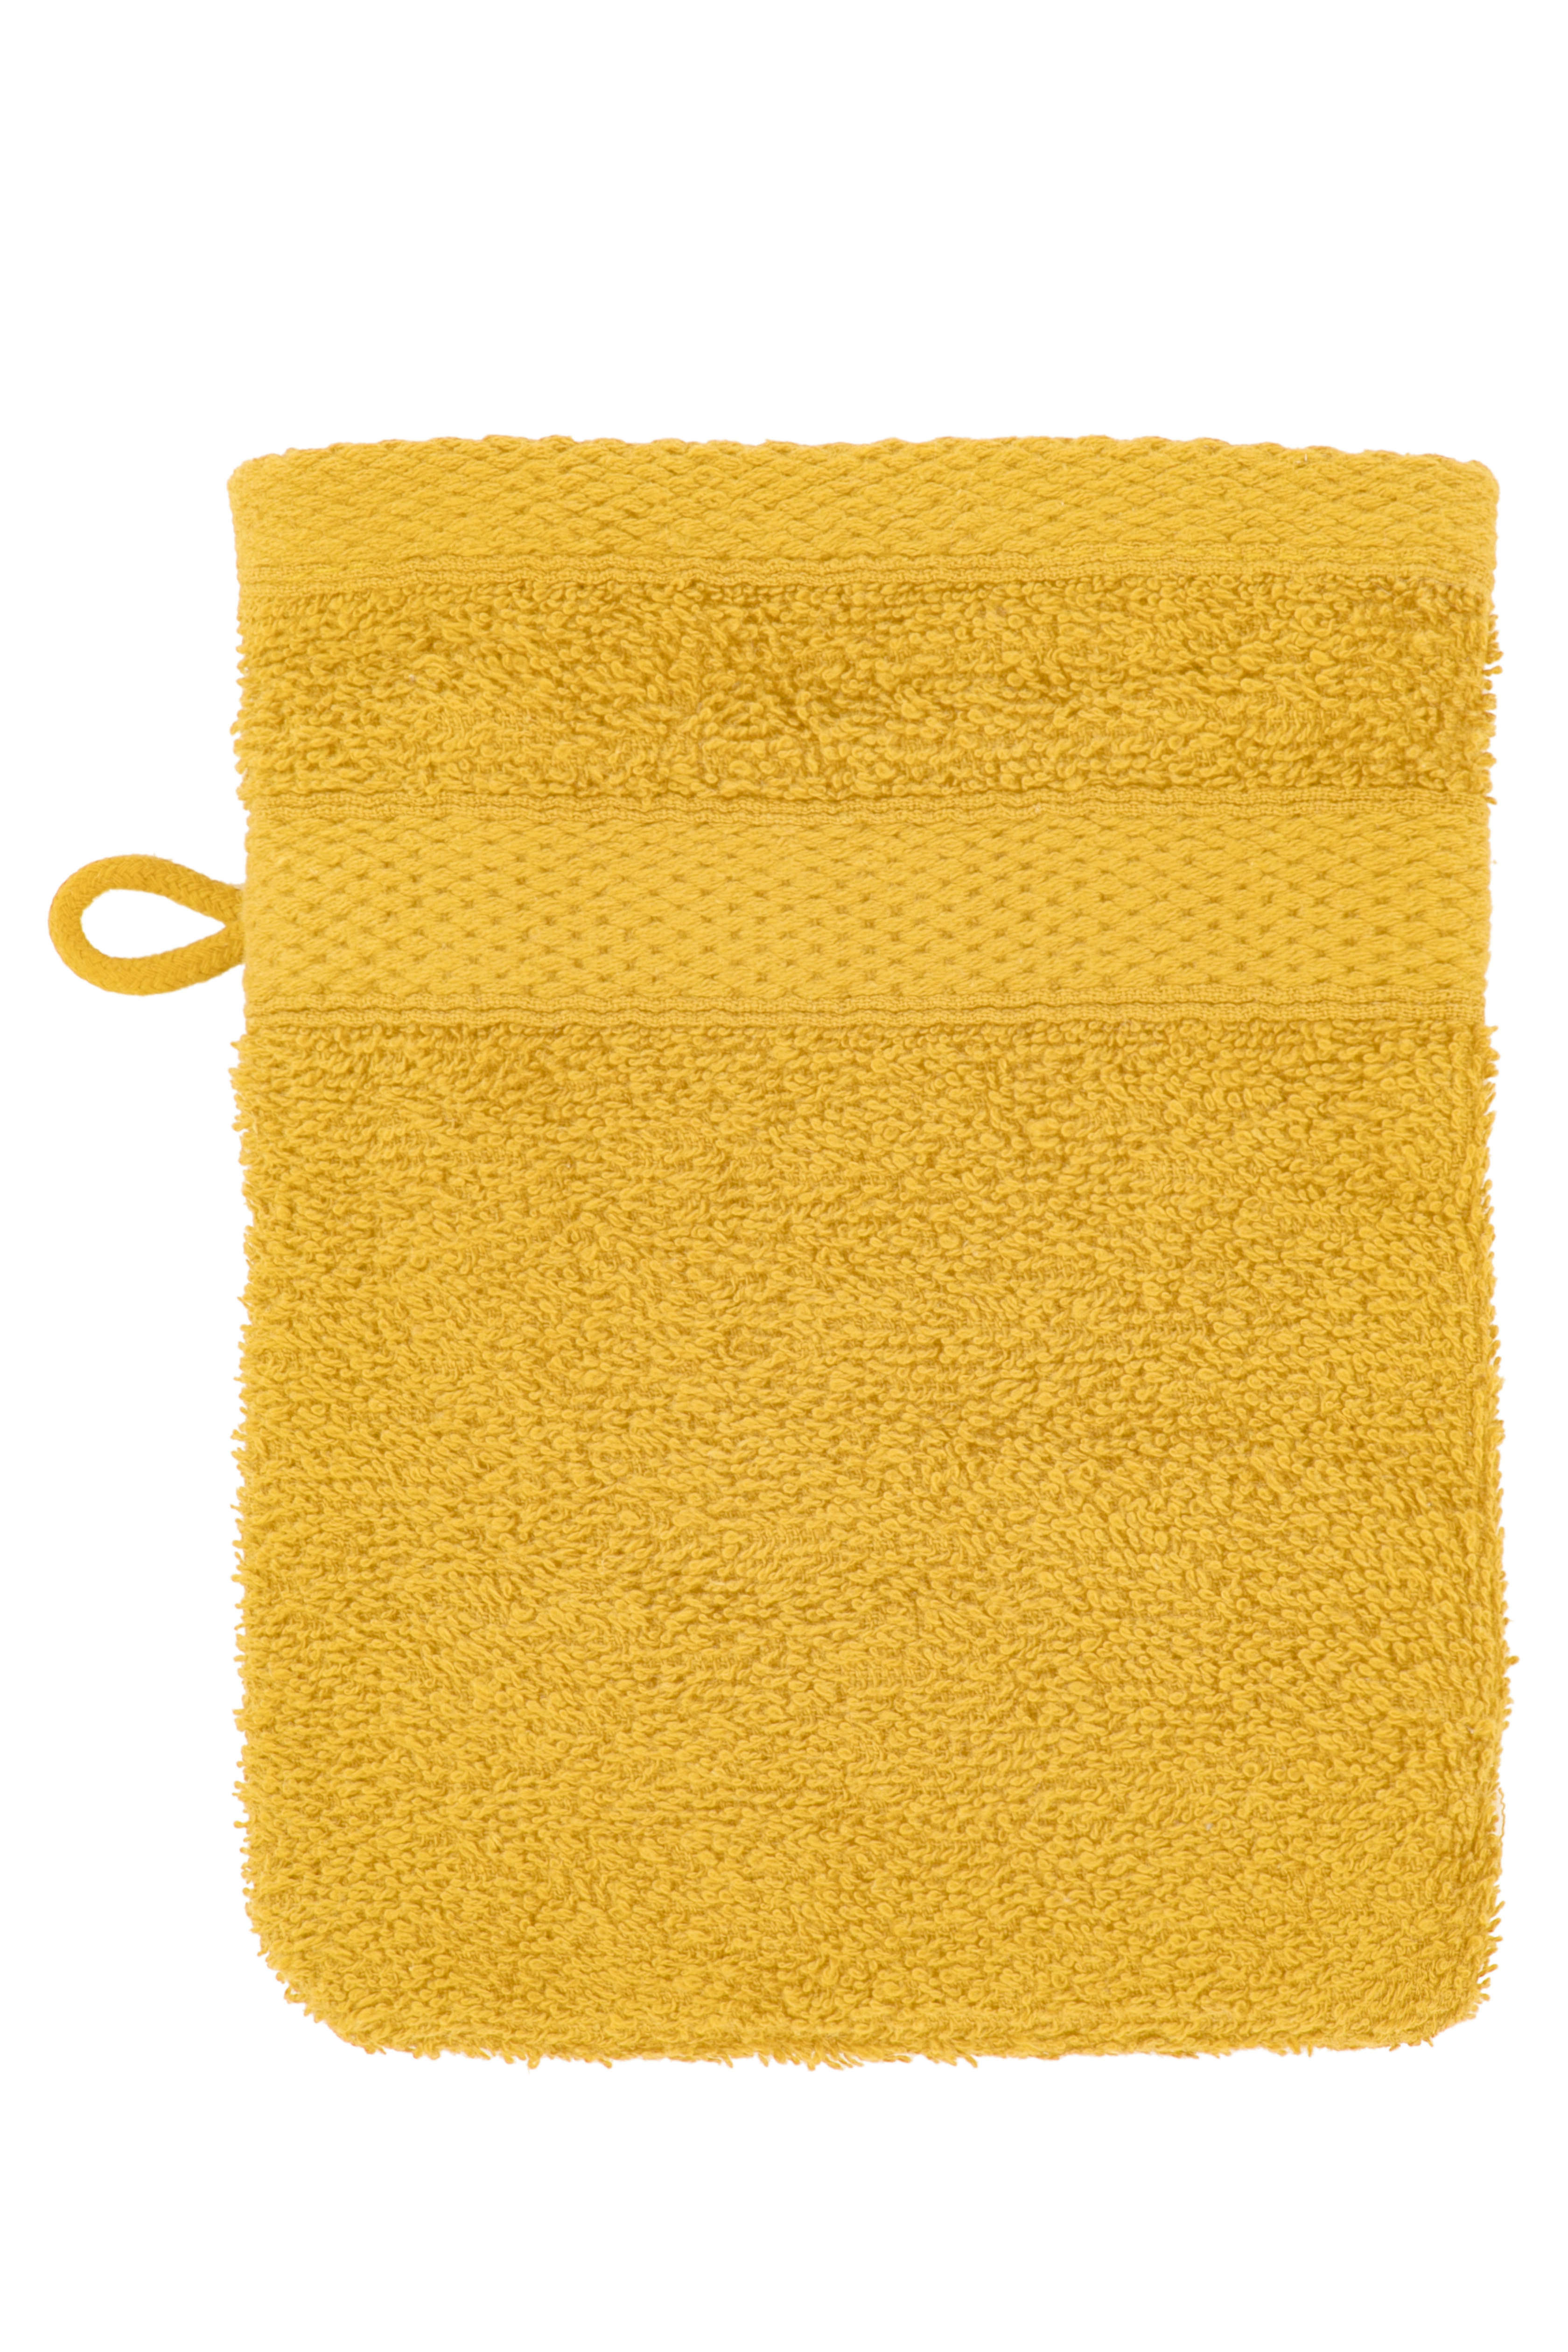 Washing glove 15x21cm, sunflower yellow - set2